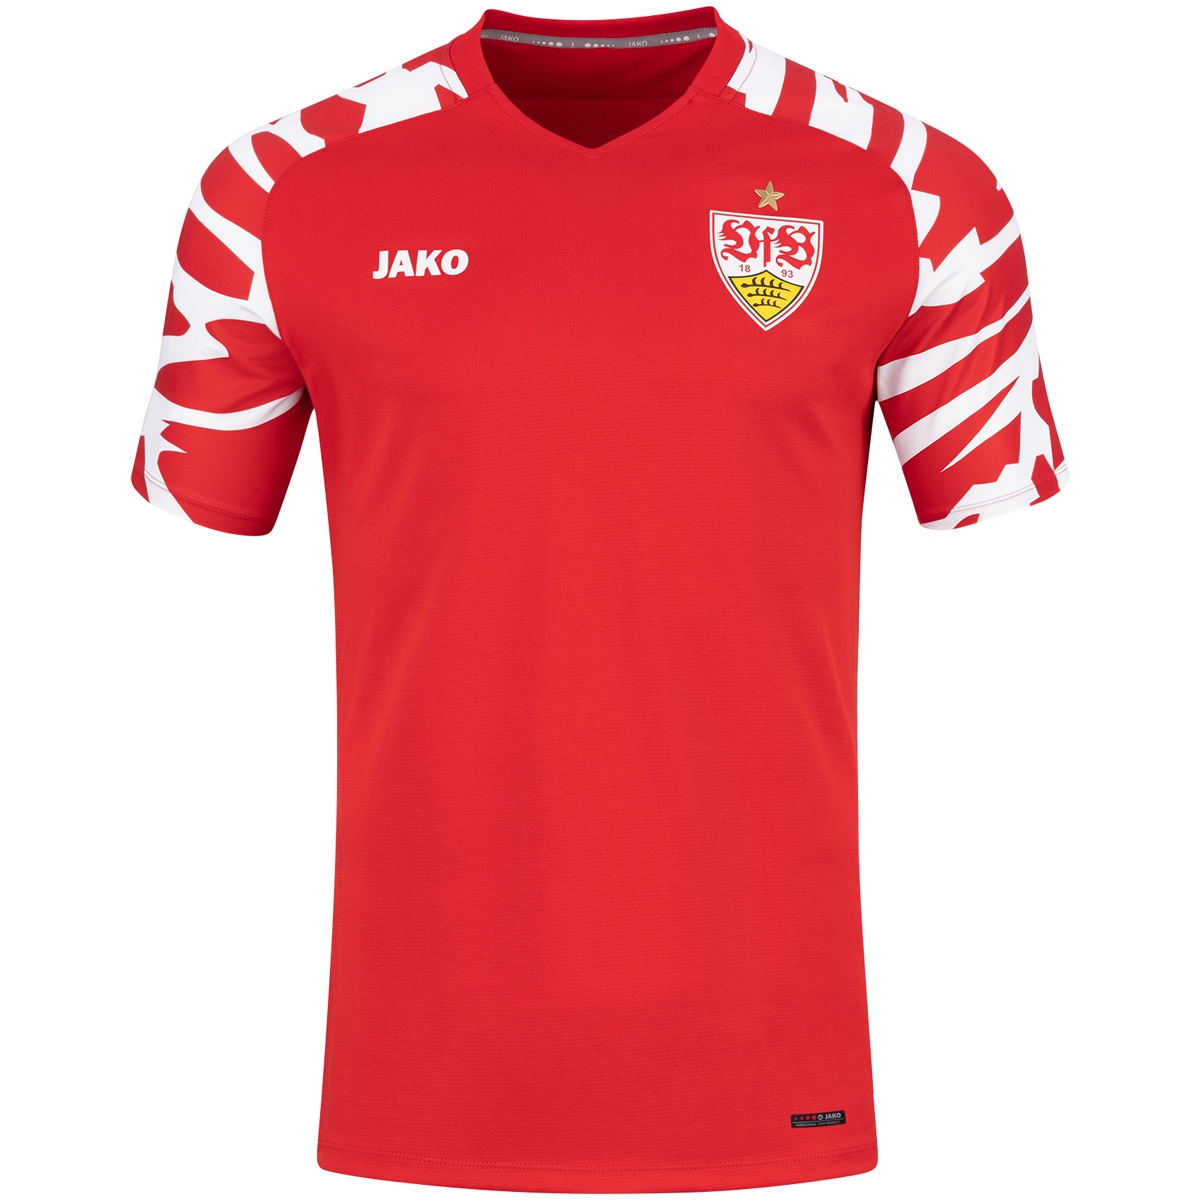 Jako VfB Stuttgart T-Shirt Wild